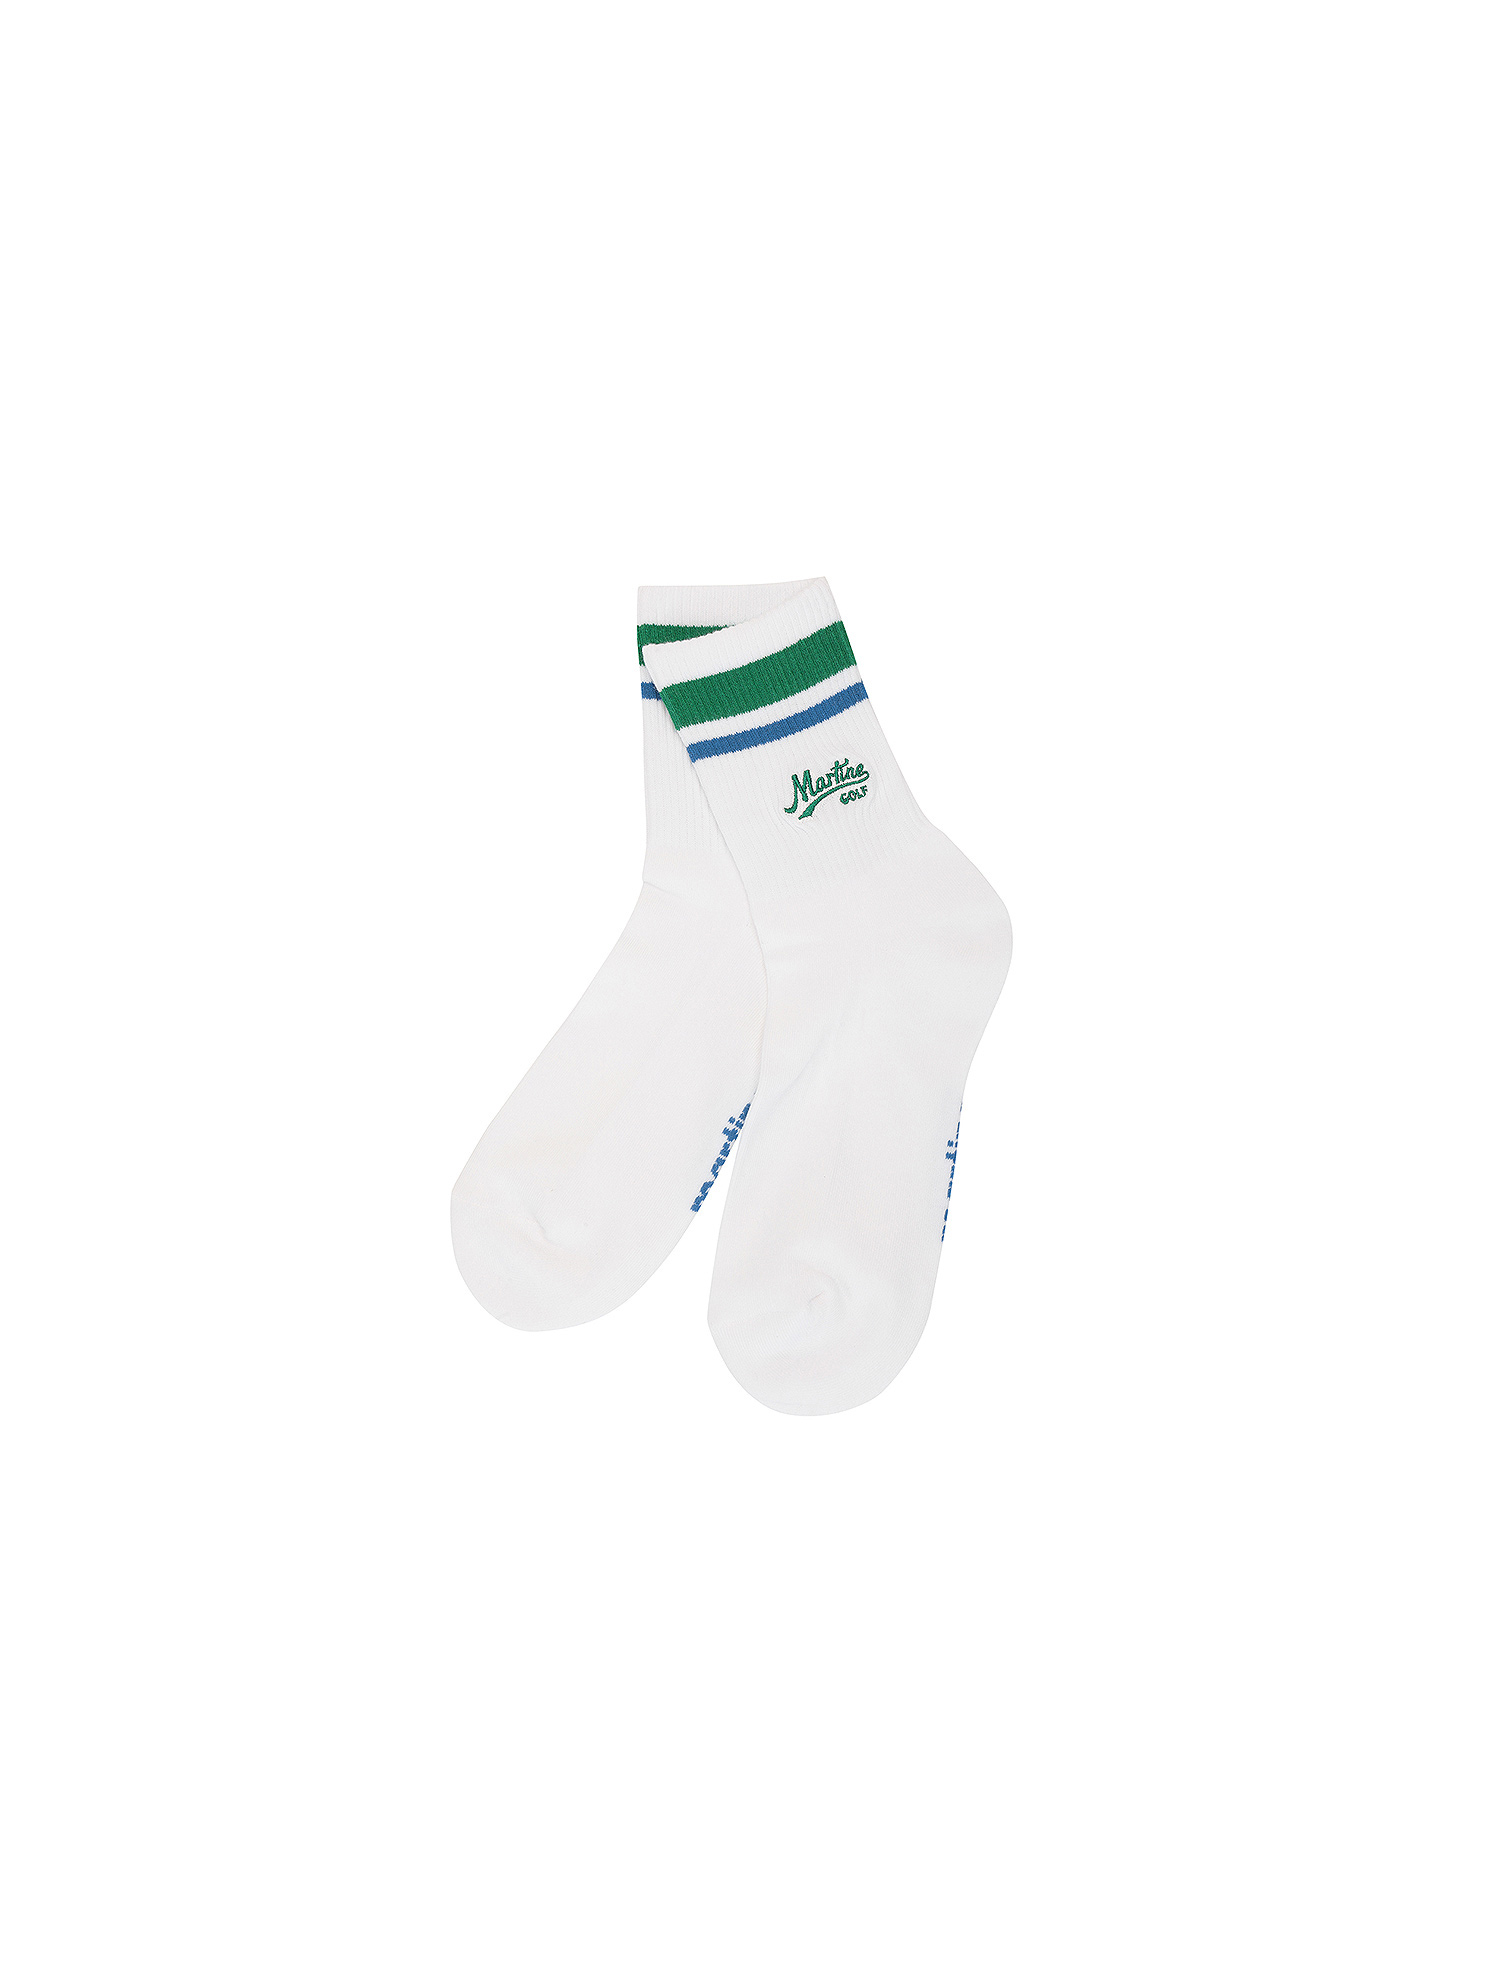 Symbol Point Middle Socks_Green (Men) (QMAESC10322)